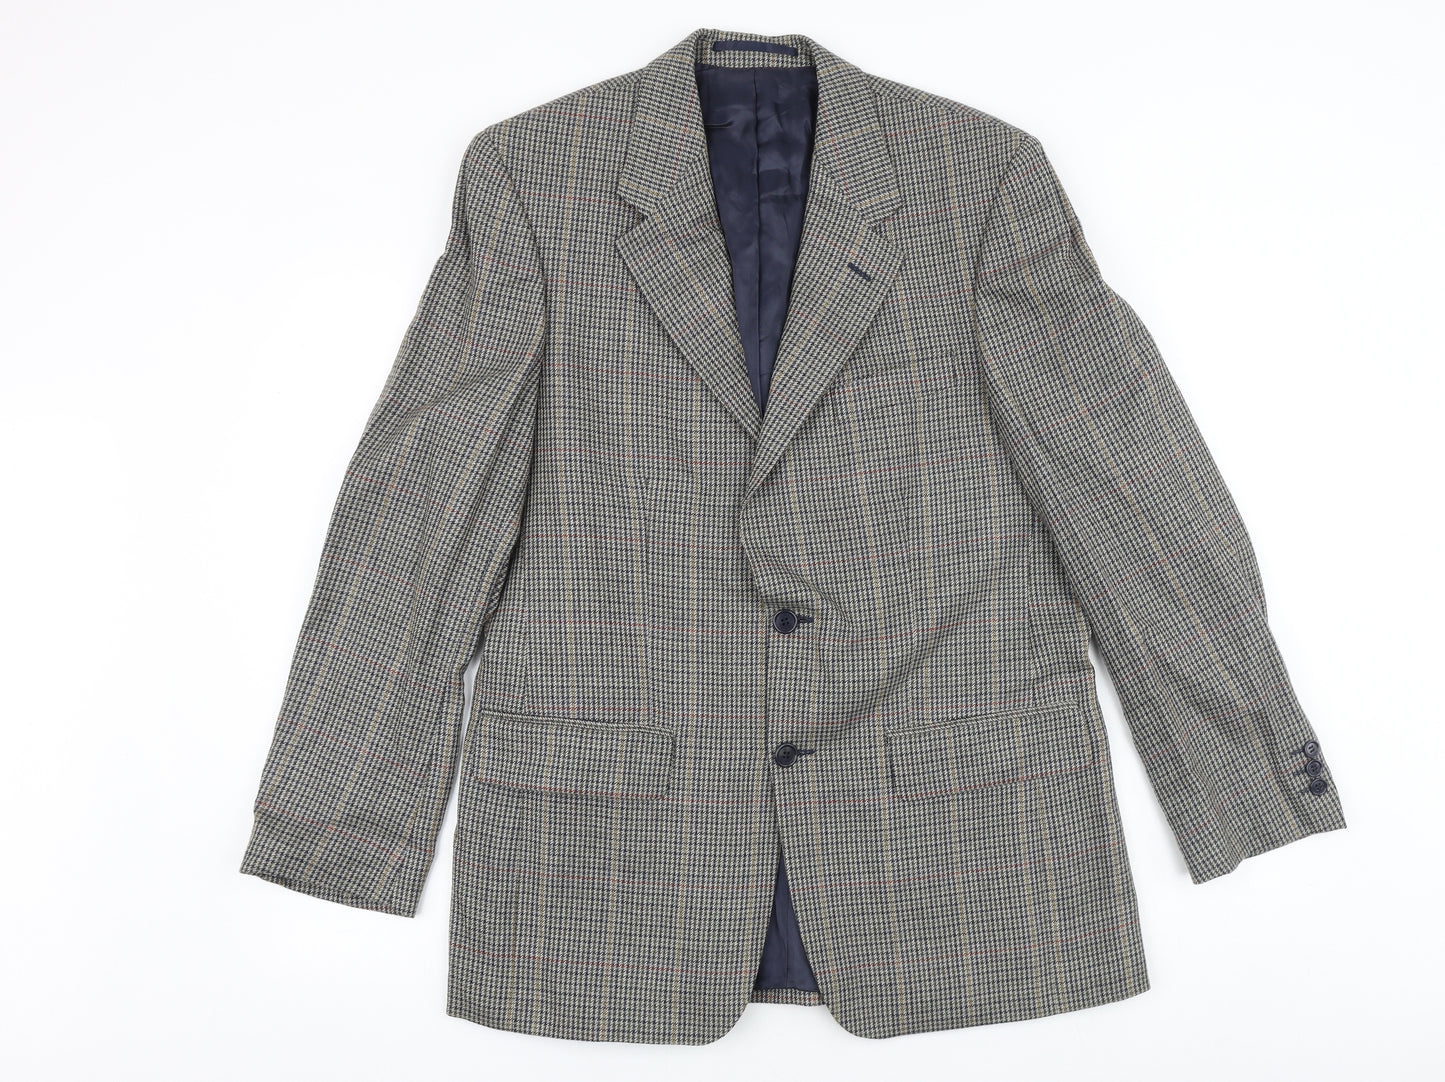 West Brook Mens Multicoloured Geometric Cotton Jacket Suit Jacket Size 38 Regular